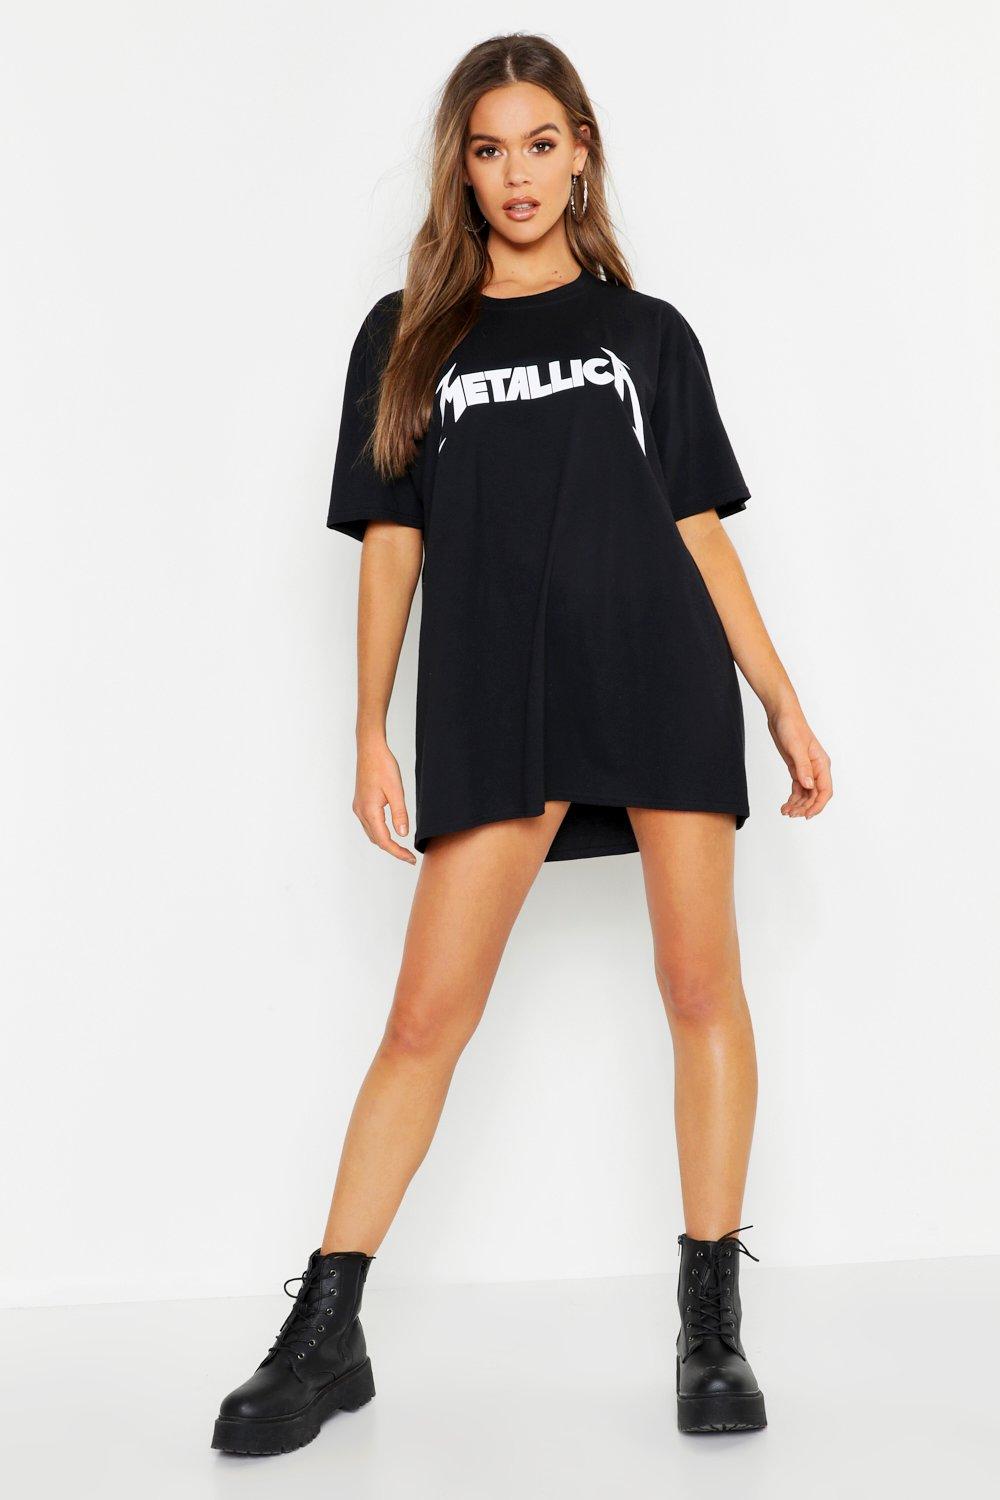 Metallica License Oversized T Shirt Dress Boohoo